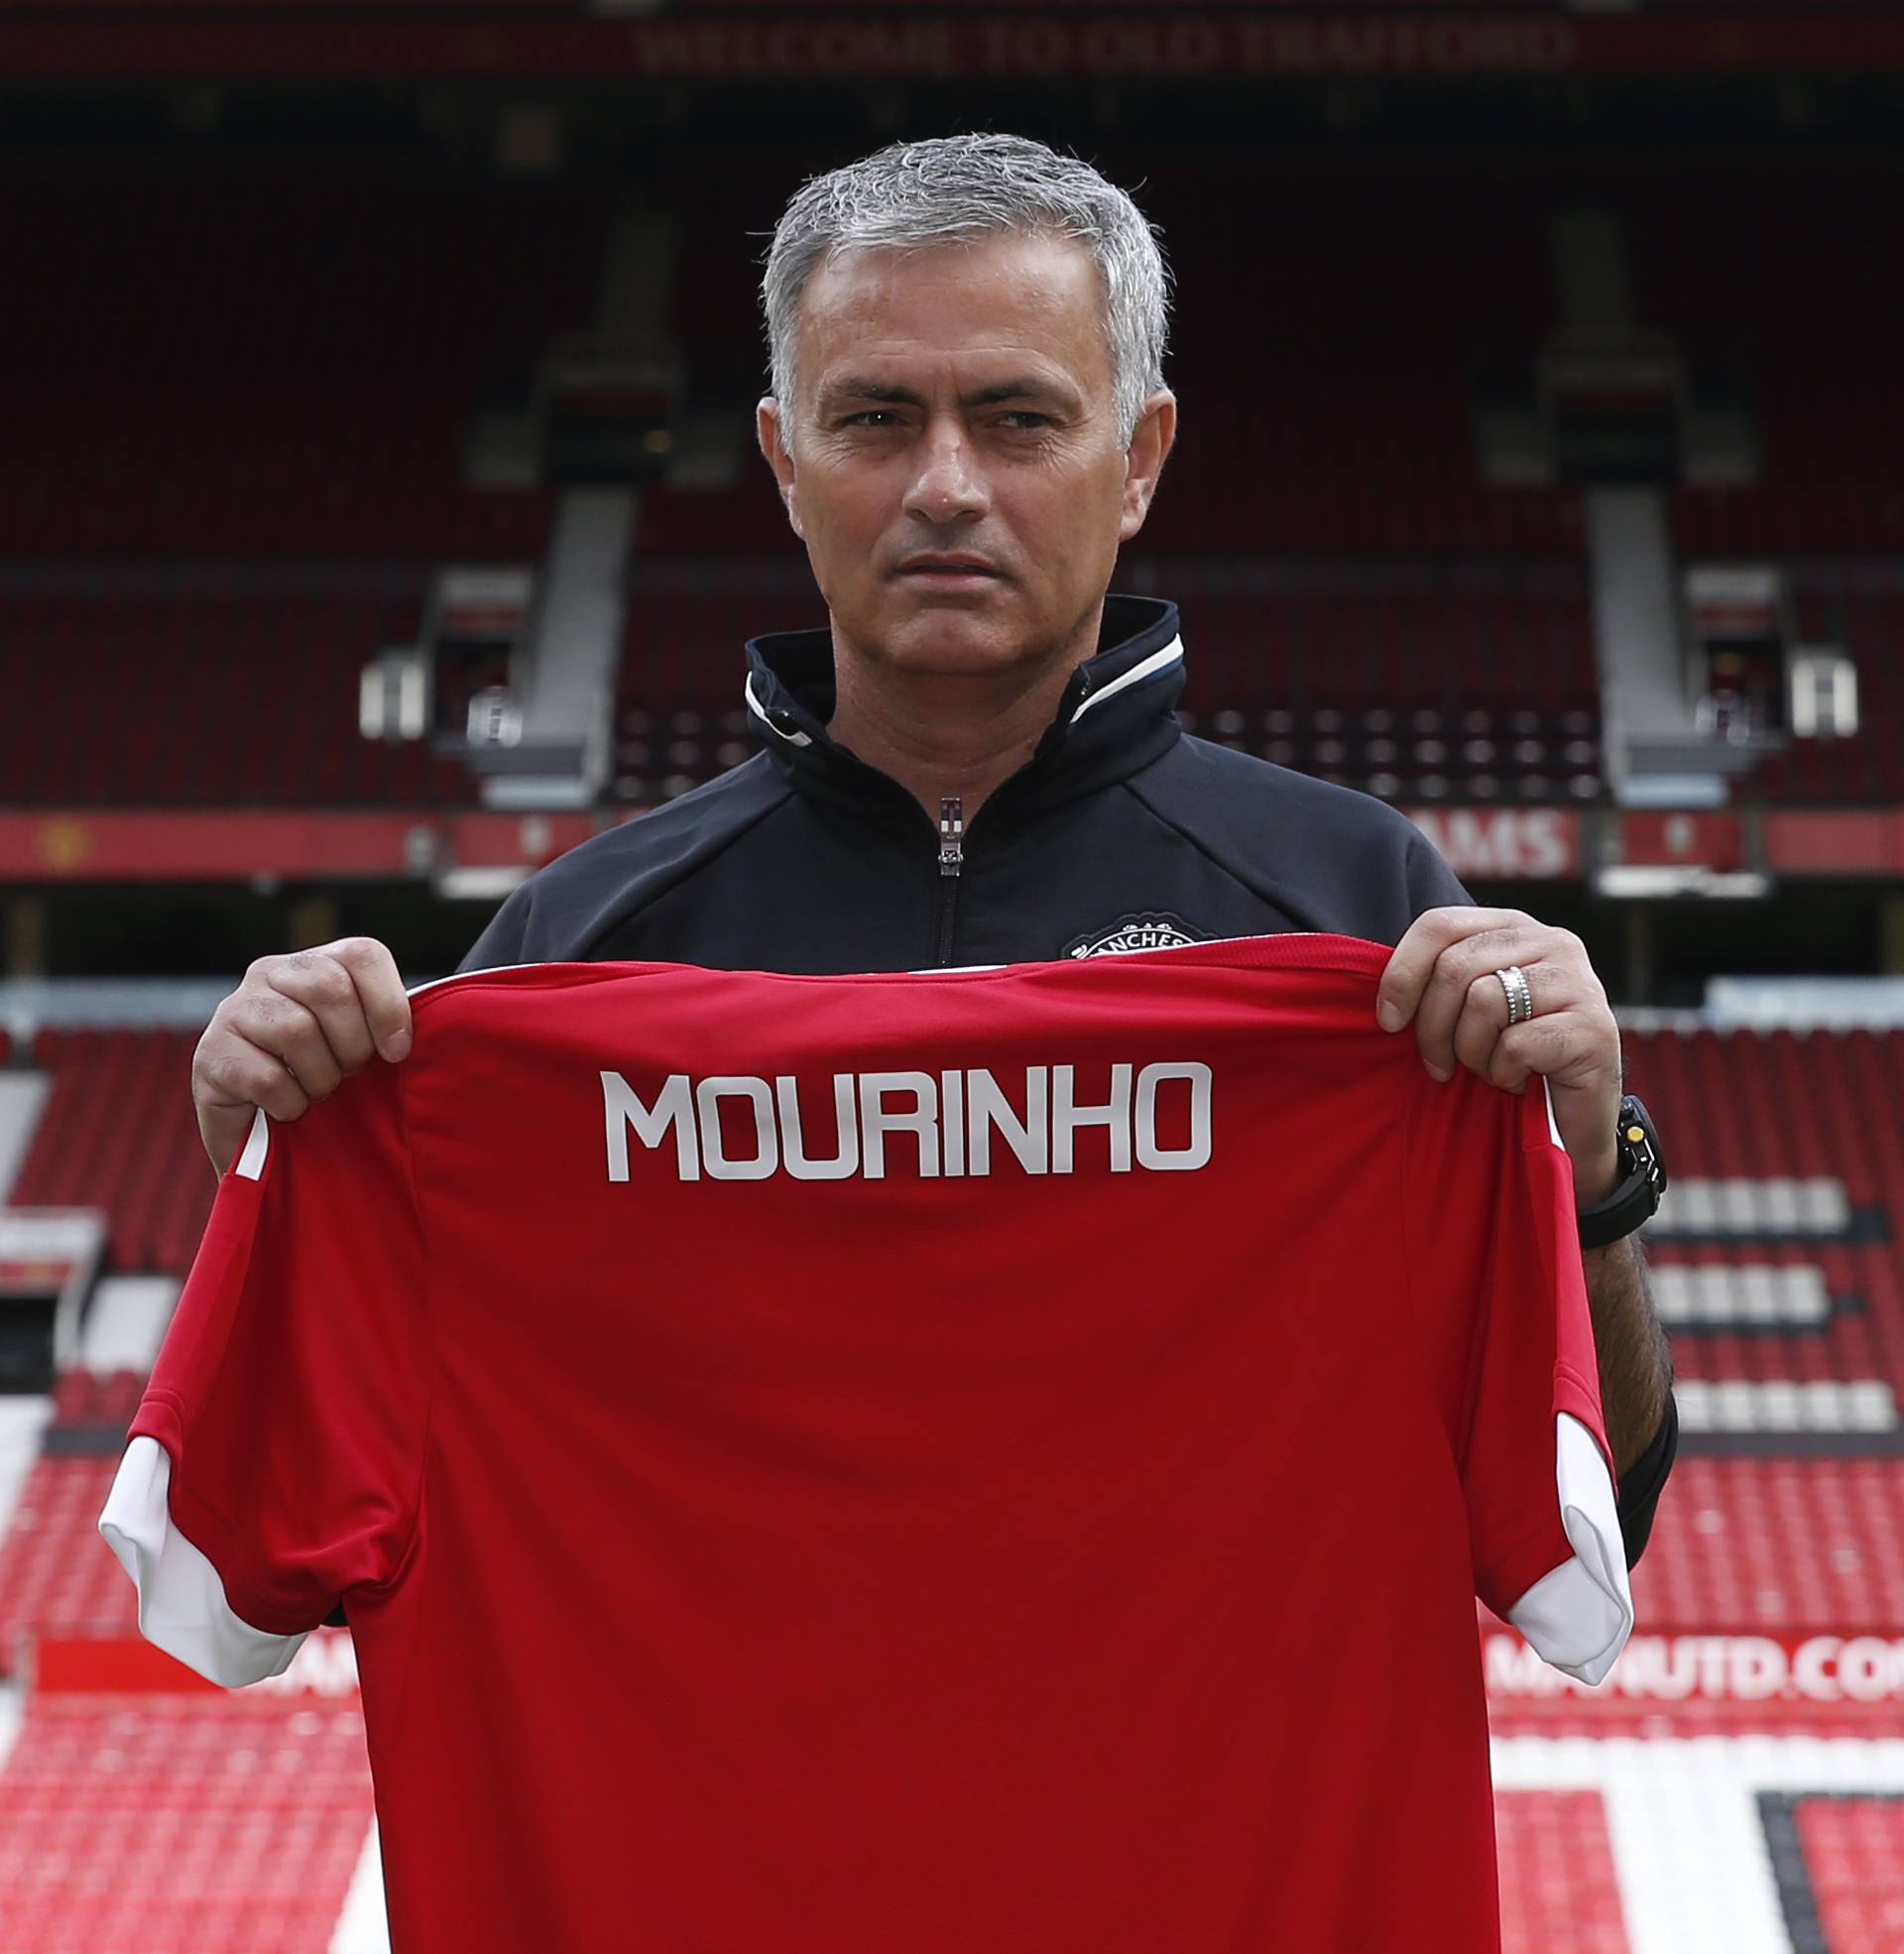 Manchester United - Jose Mourinho Press Conference